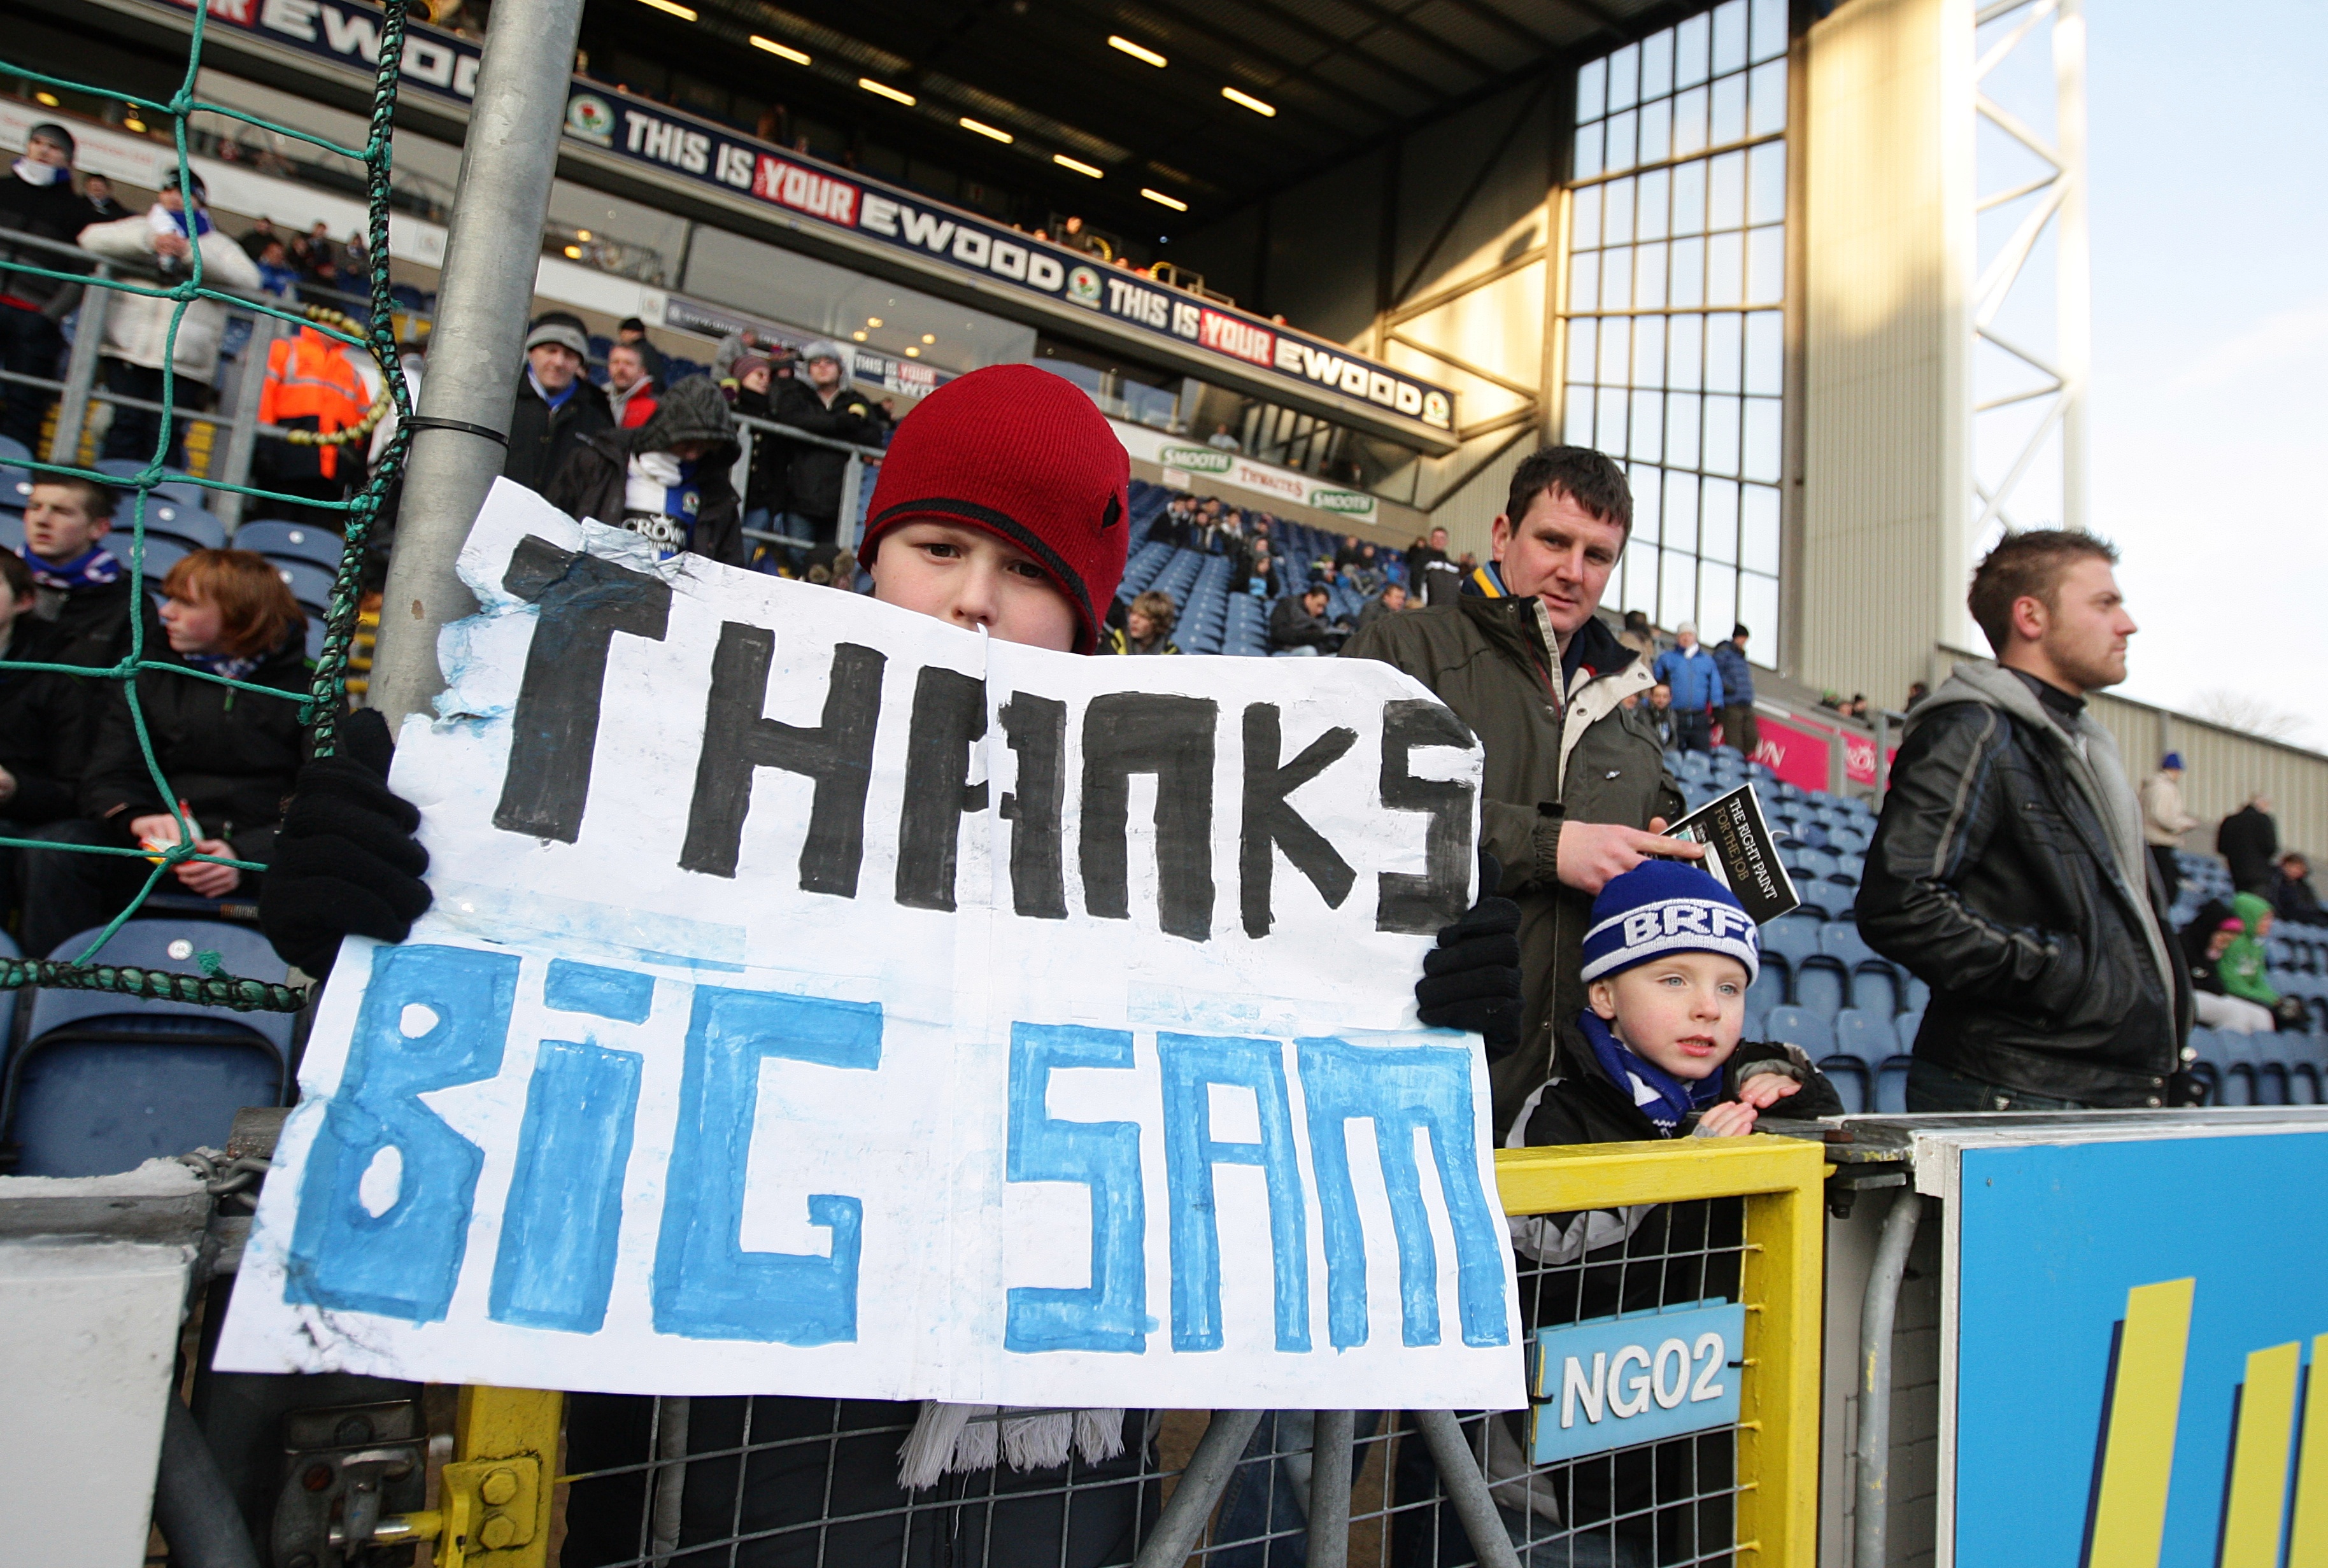 Fans show their support for Sam Allardyce